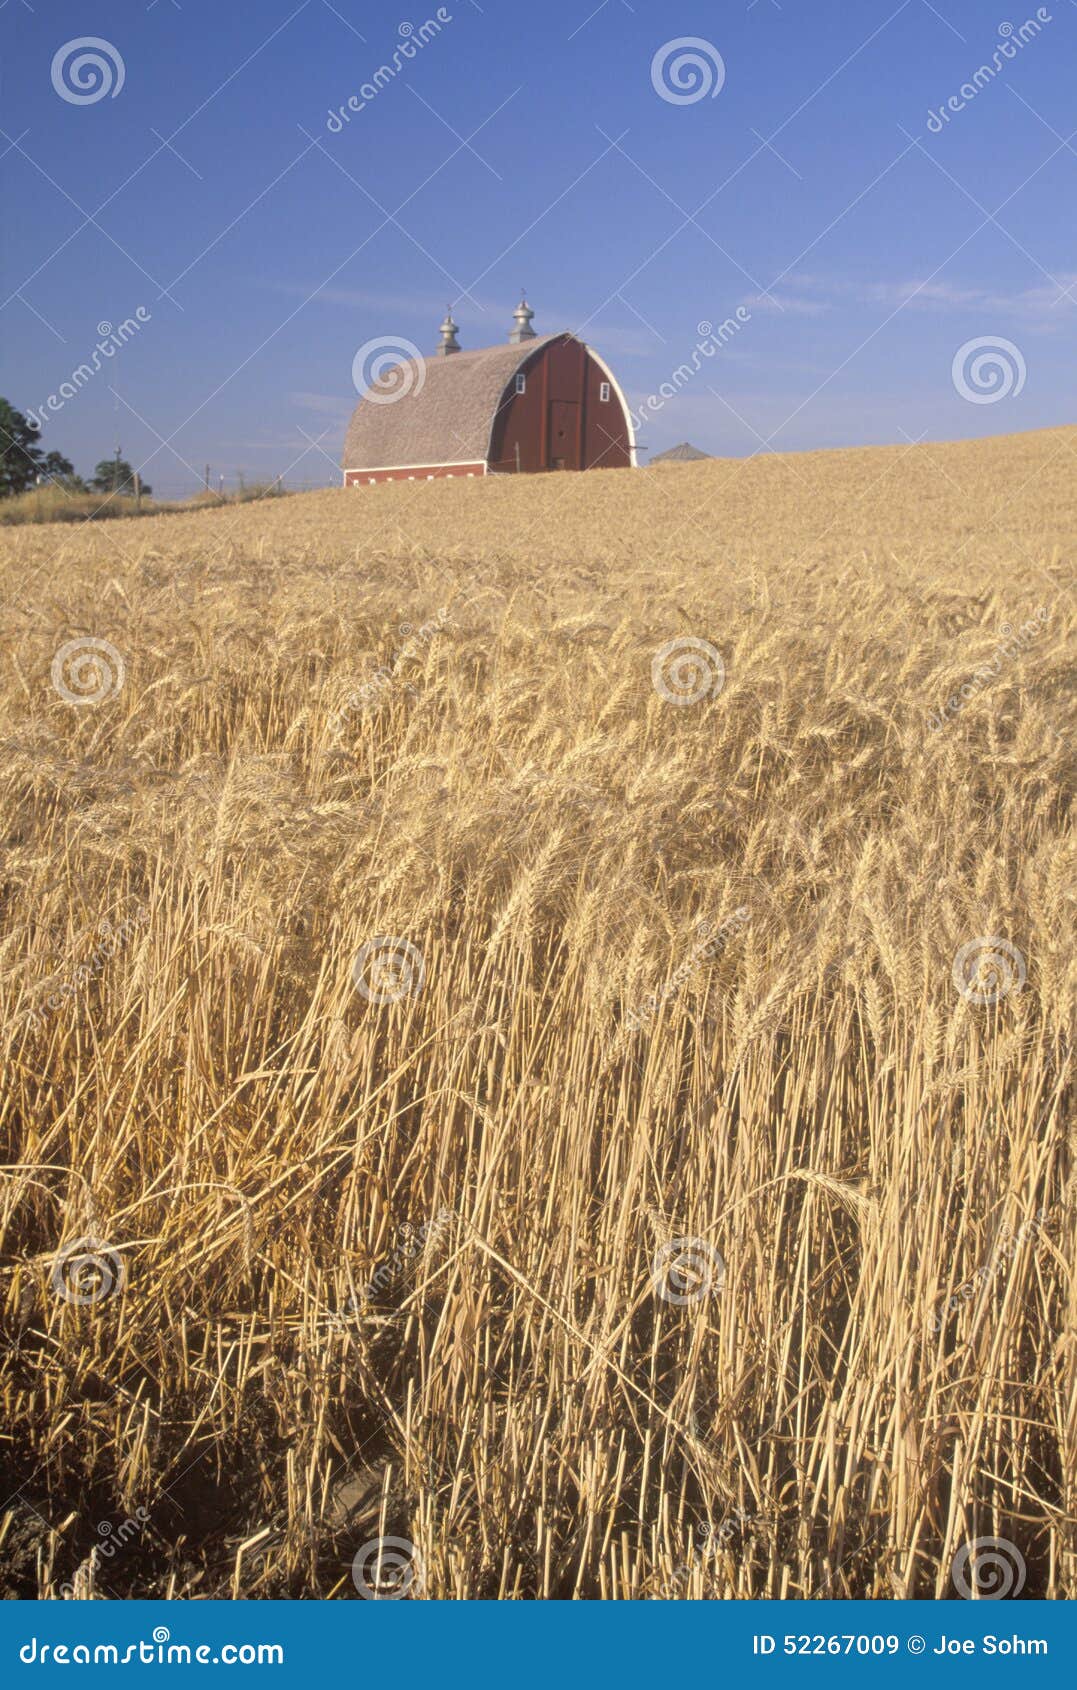 a wheat field and barn in southeast wa